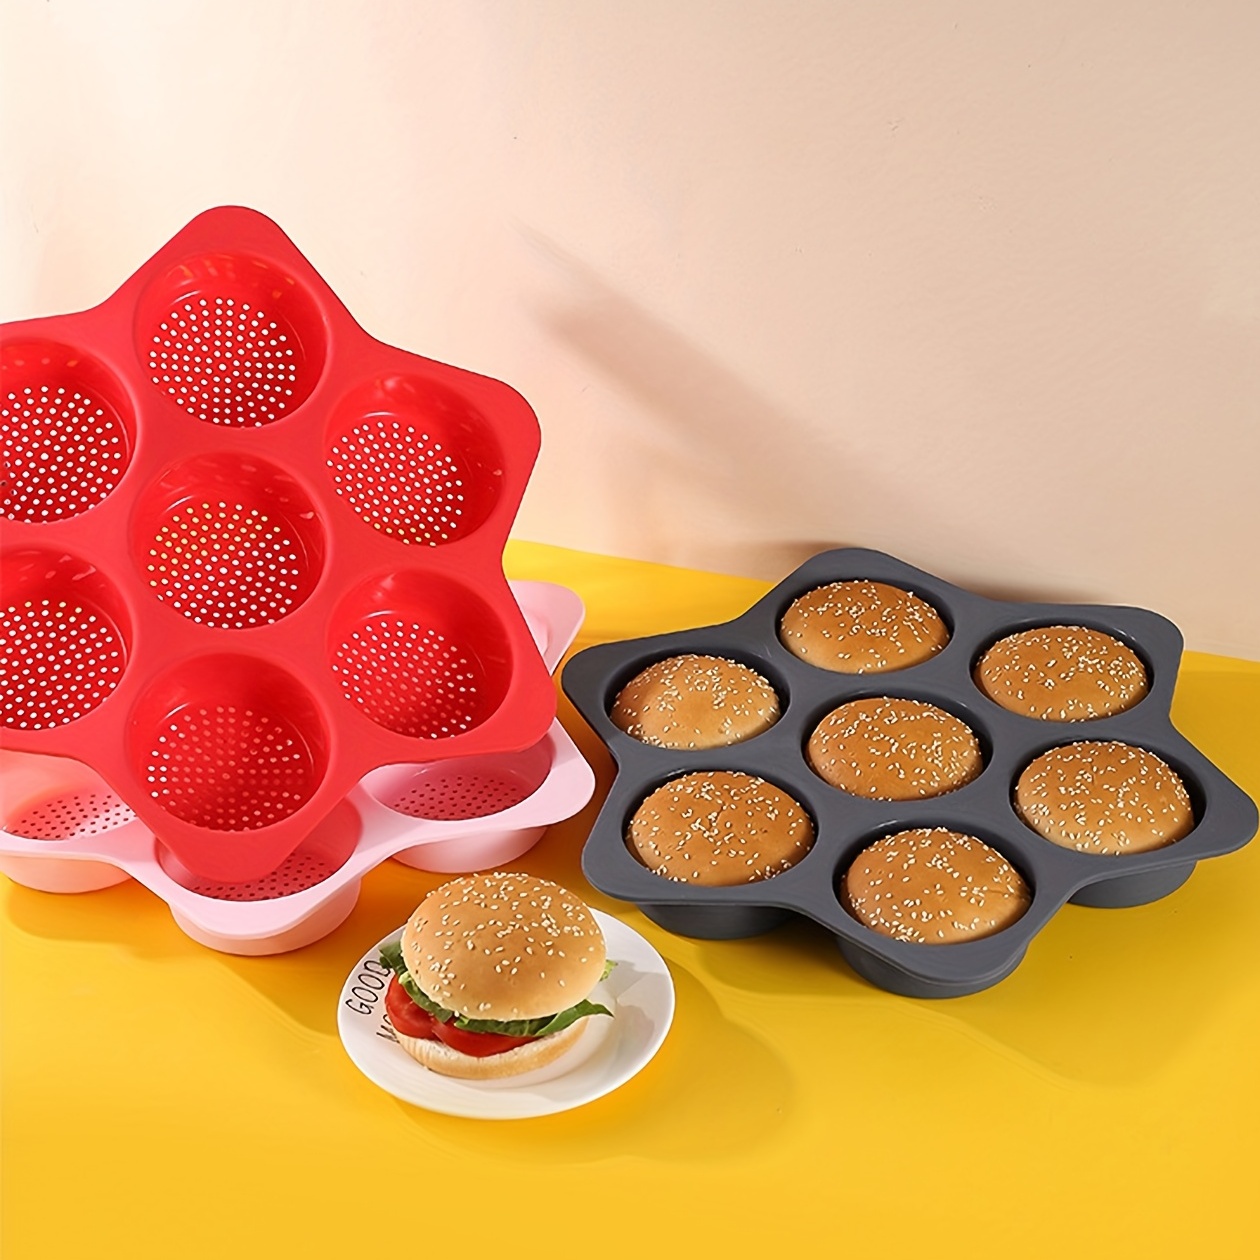 Muffin Top Pan, Hamburger Bun Pan, 6 Cavities Baking Tray,3.5 inches, for  Baking Hamburgers, Cakes, Muffins and Poached Eggs Gold